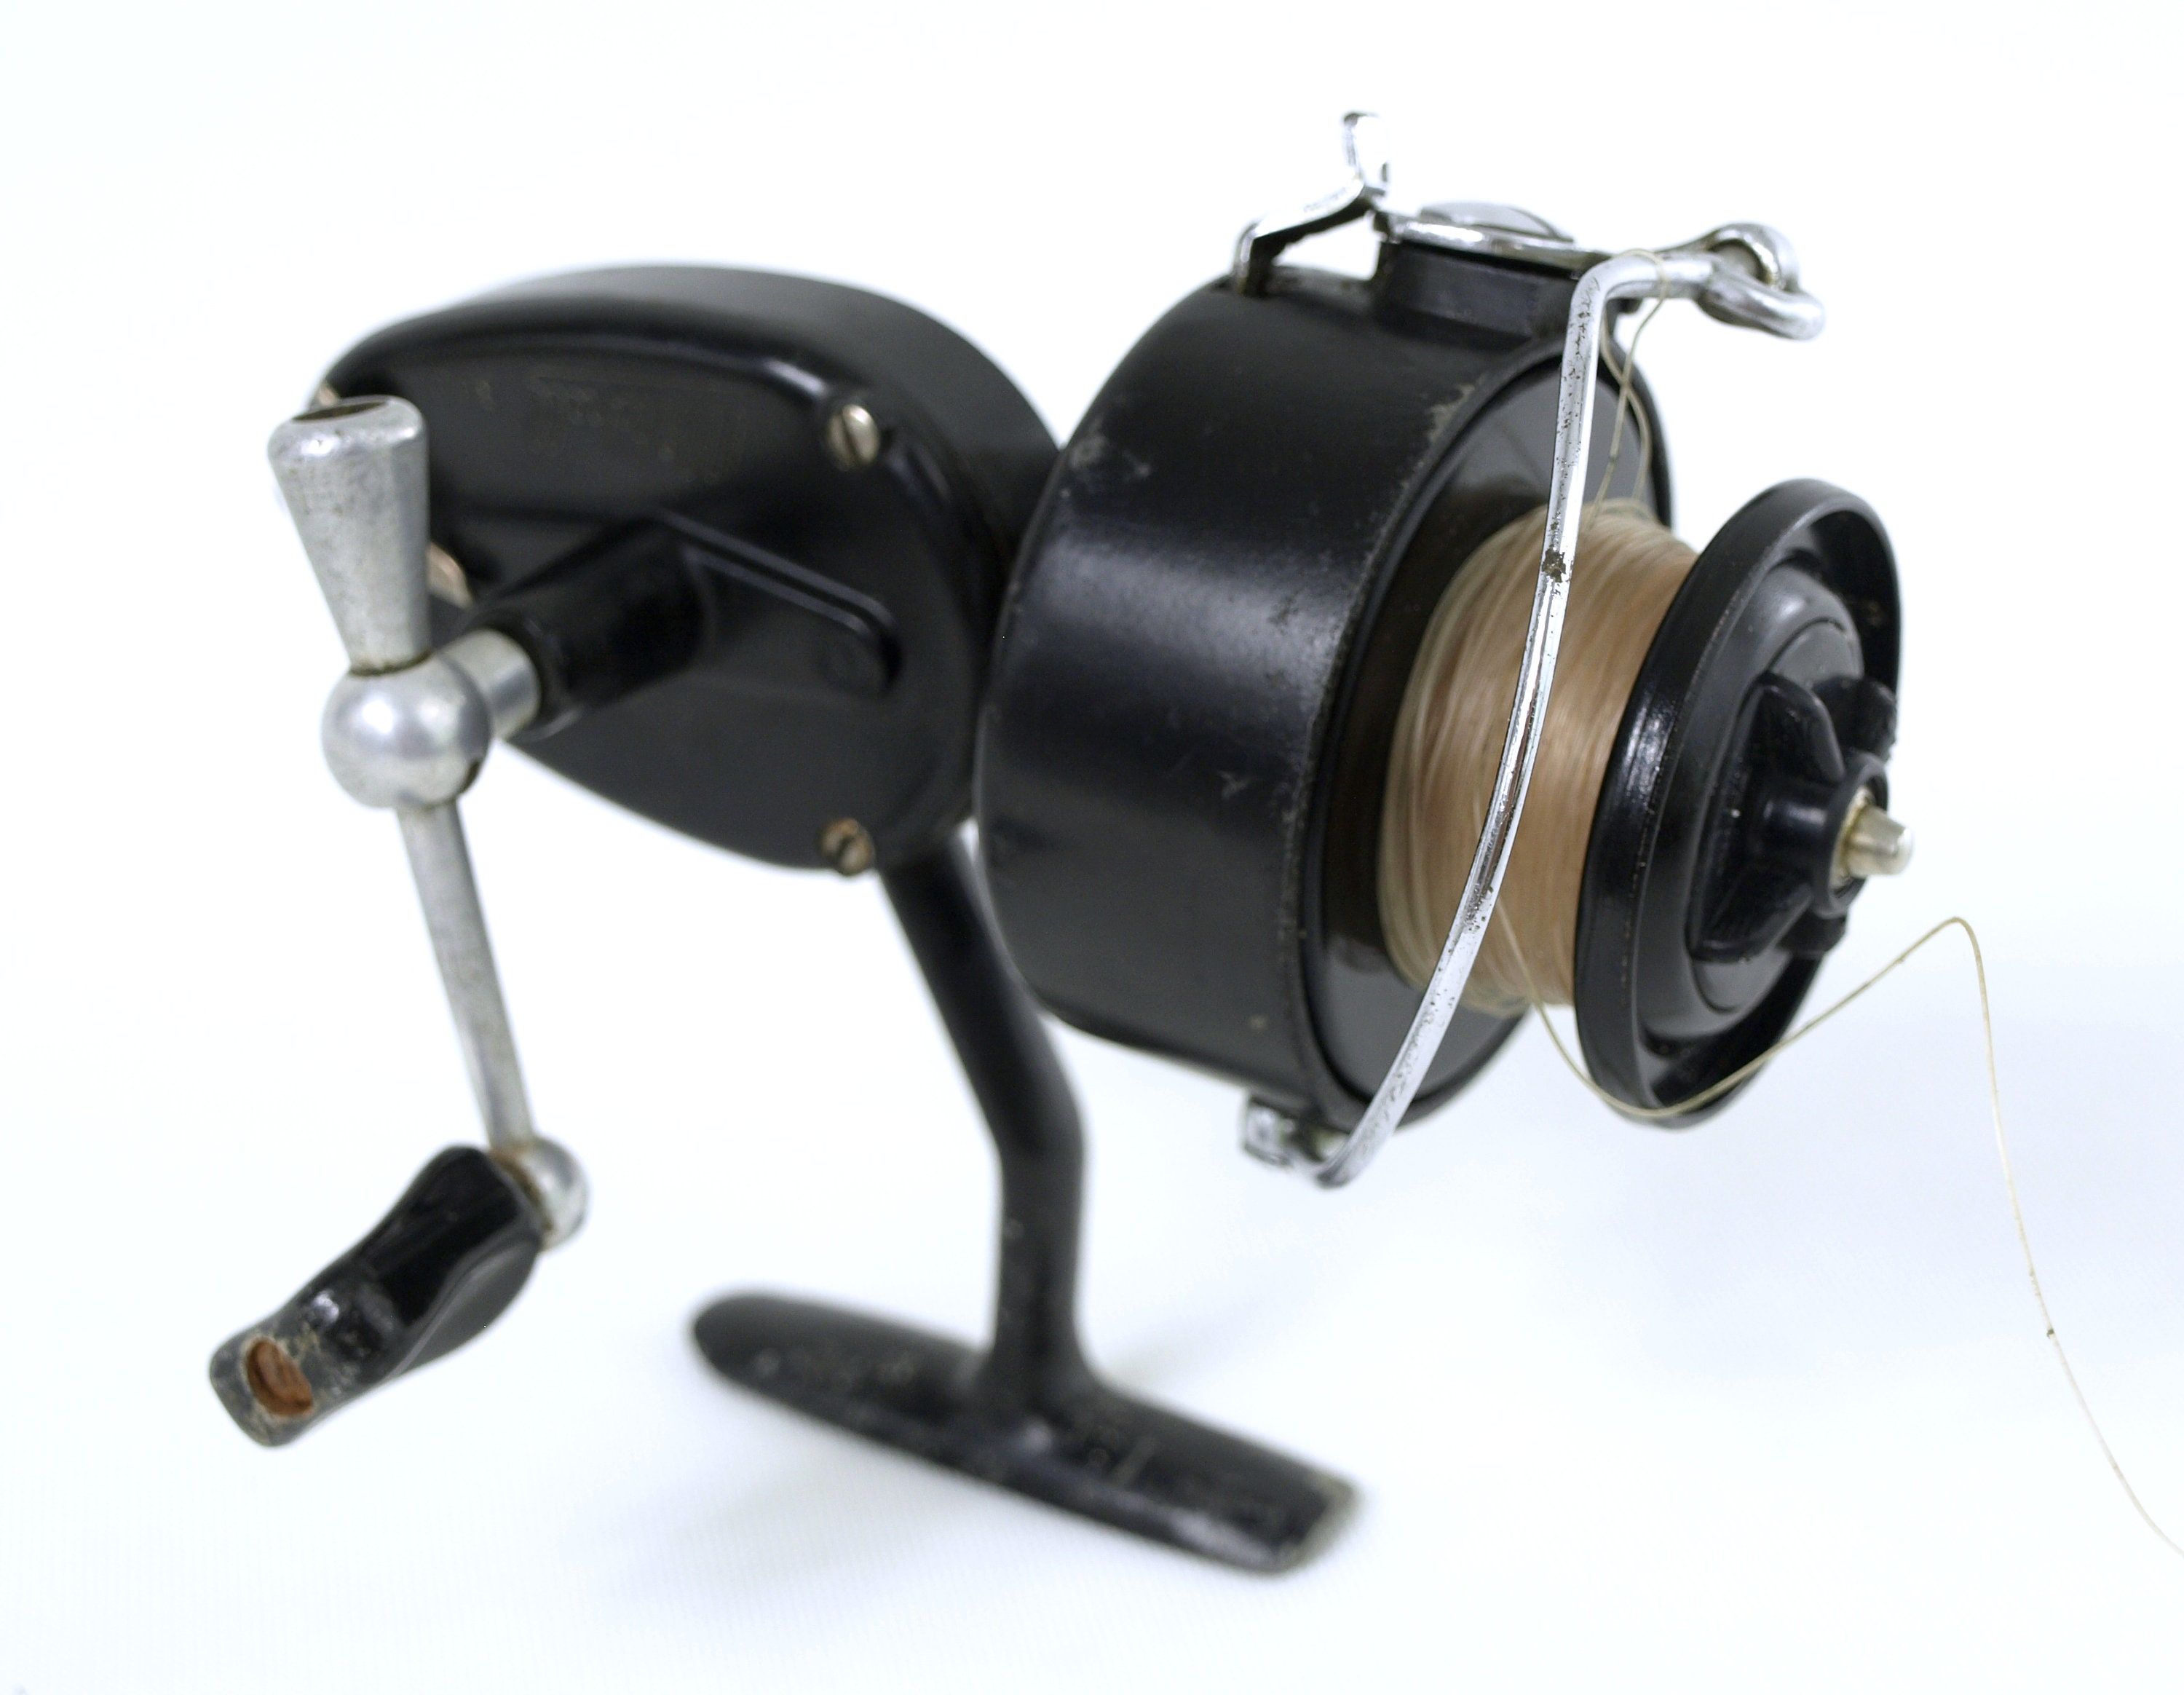 Mitchell 5540 RD Full Control Fishing Reel Trigger Drag Graphite Spool